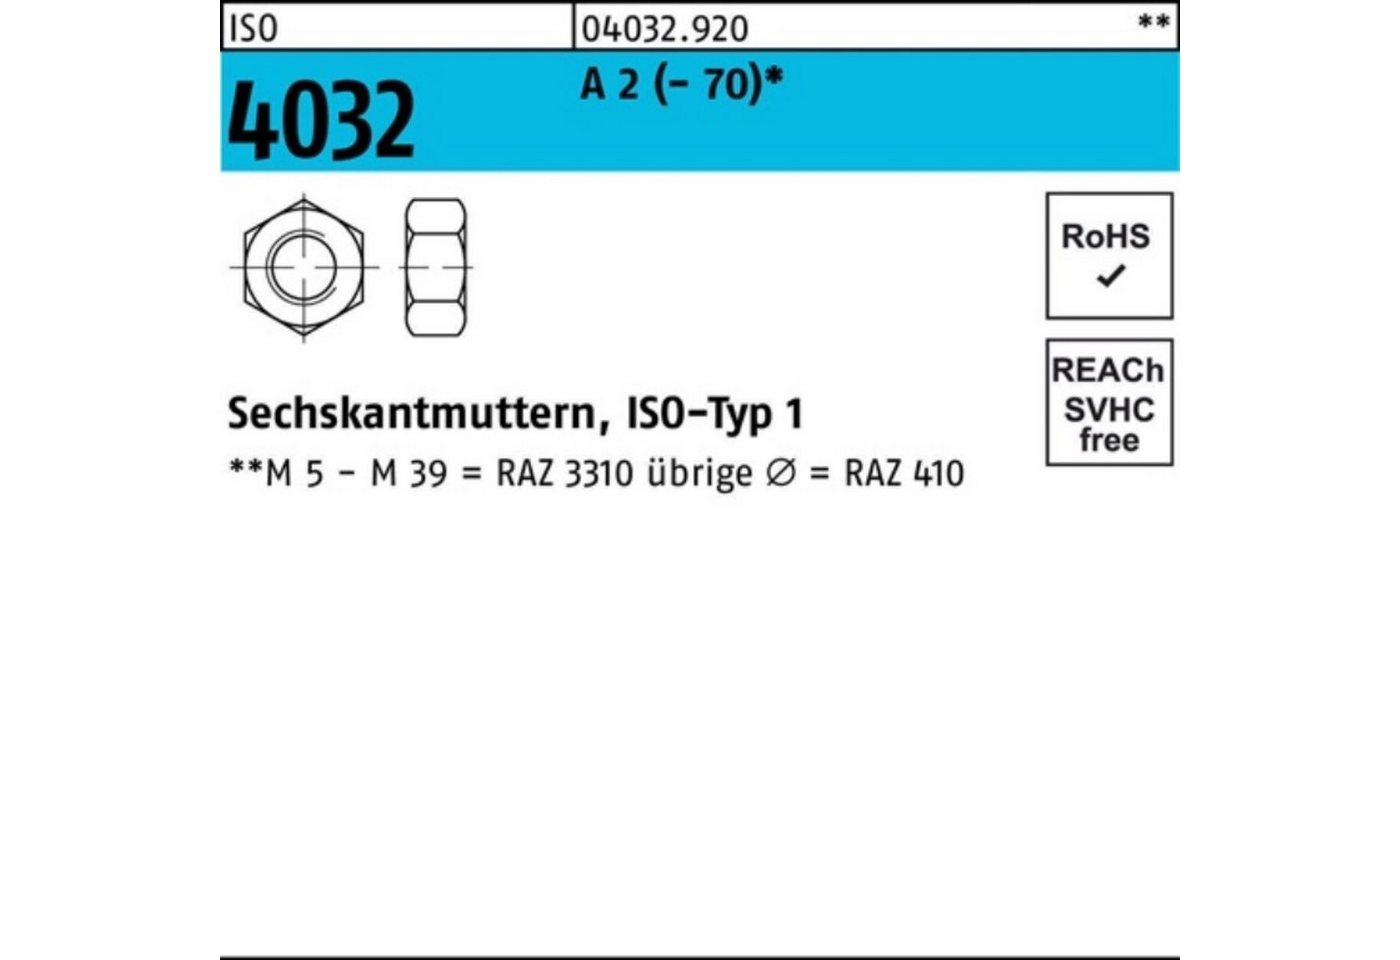 Bufab Muttern 100er Pack Sechskantmutter ISO 4032 M14 A 2 (70) 25 Stück ISO 4032 von Bufab